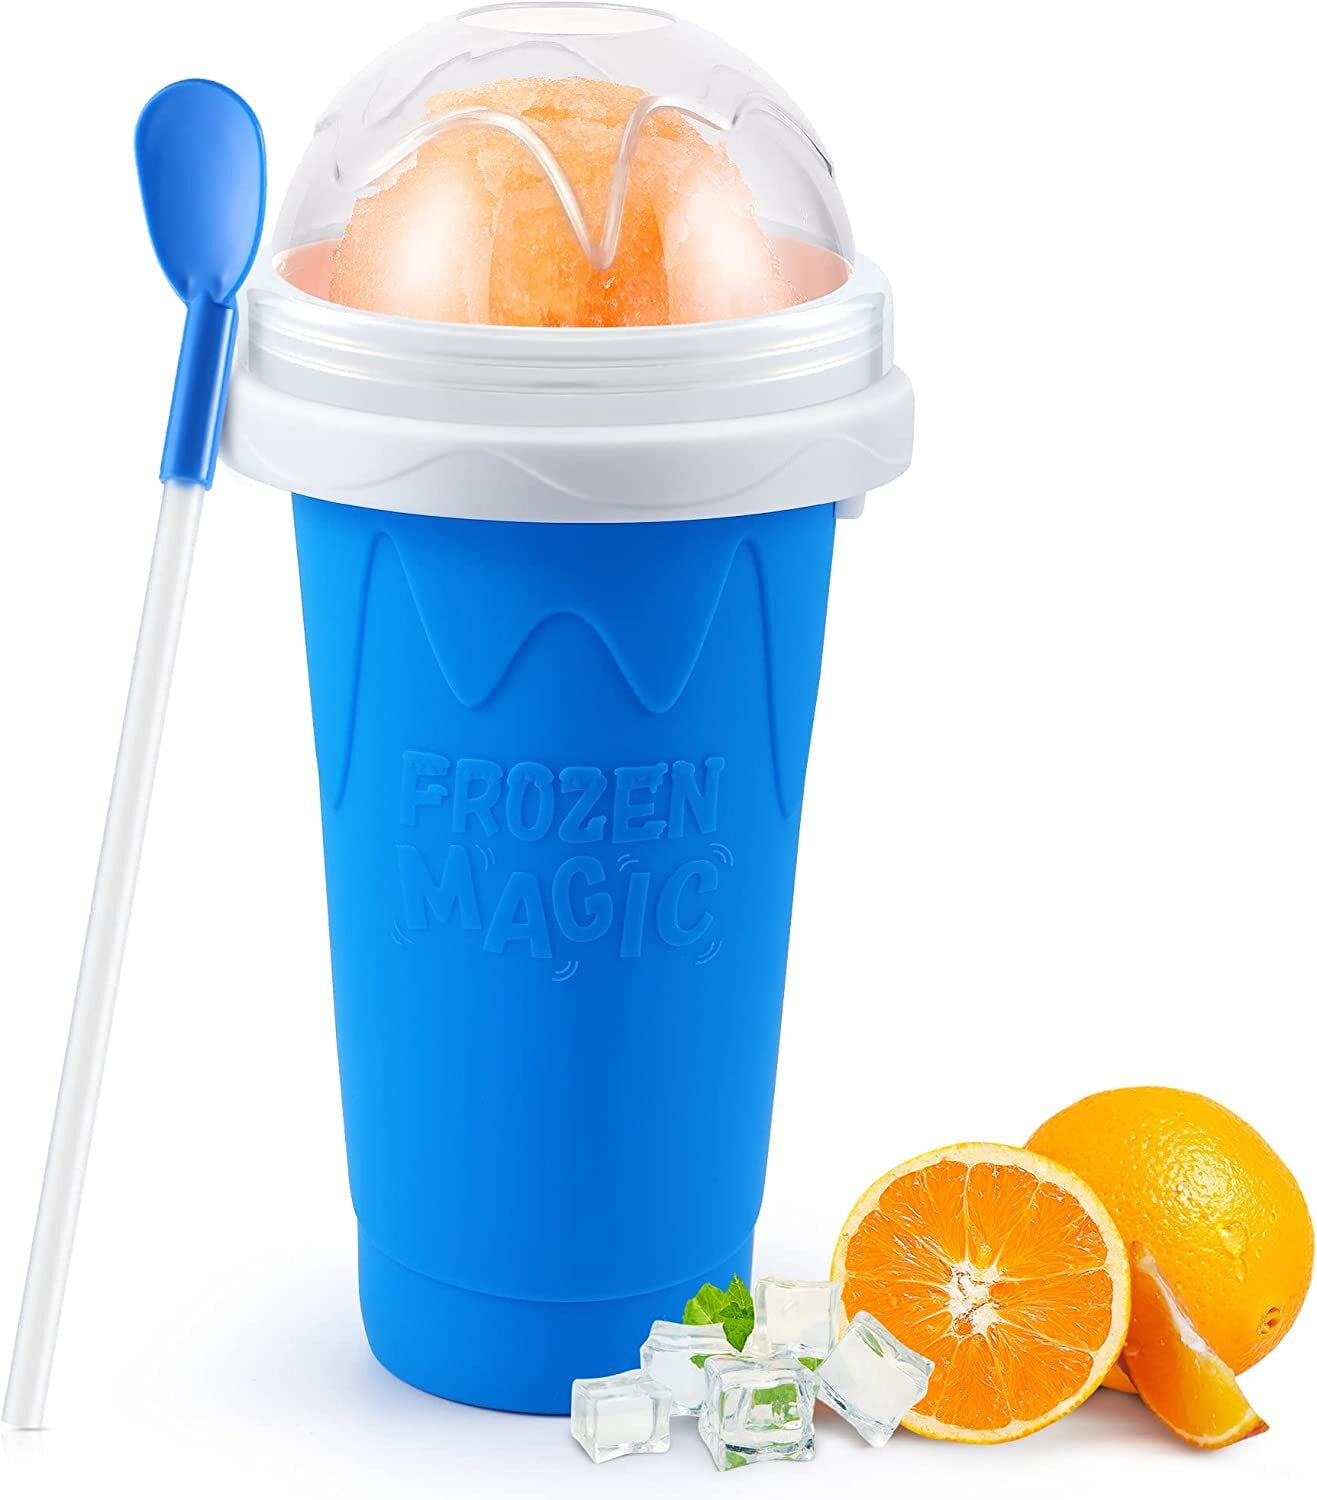 Slushy Maker Cup - TIK TOK Quick Frozen Magic Cup, Double Layers Slushie  Cup, DIY Homemade Squeeze I…See more Slushy Maker Cup - TIK TOK Quick  Frozen